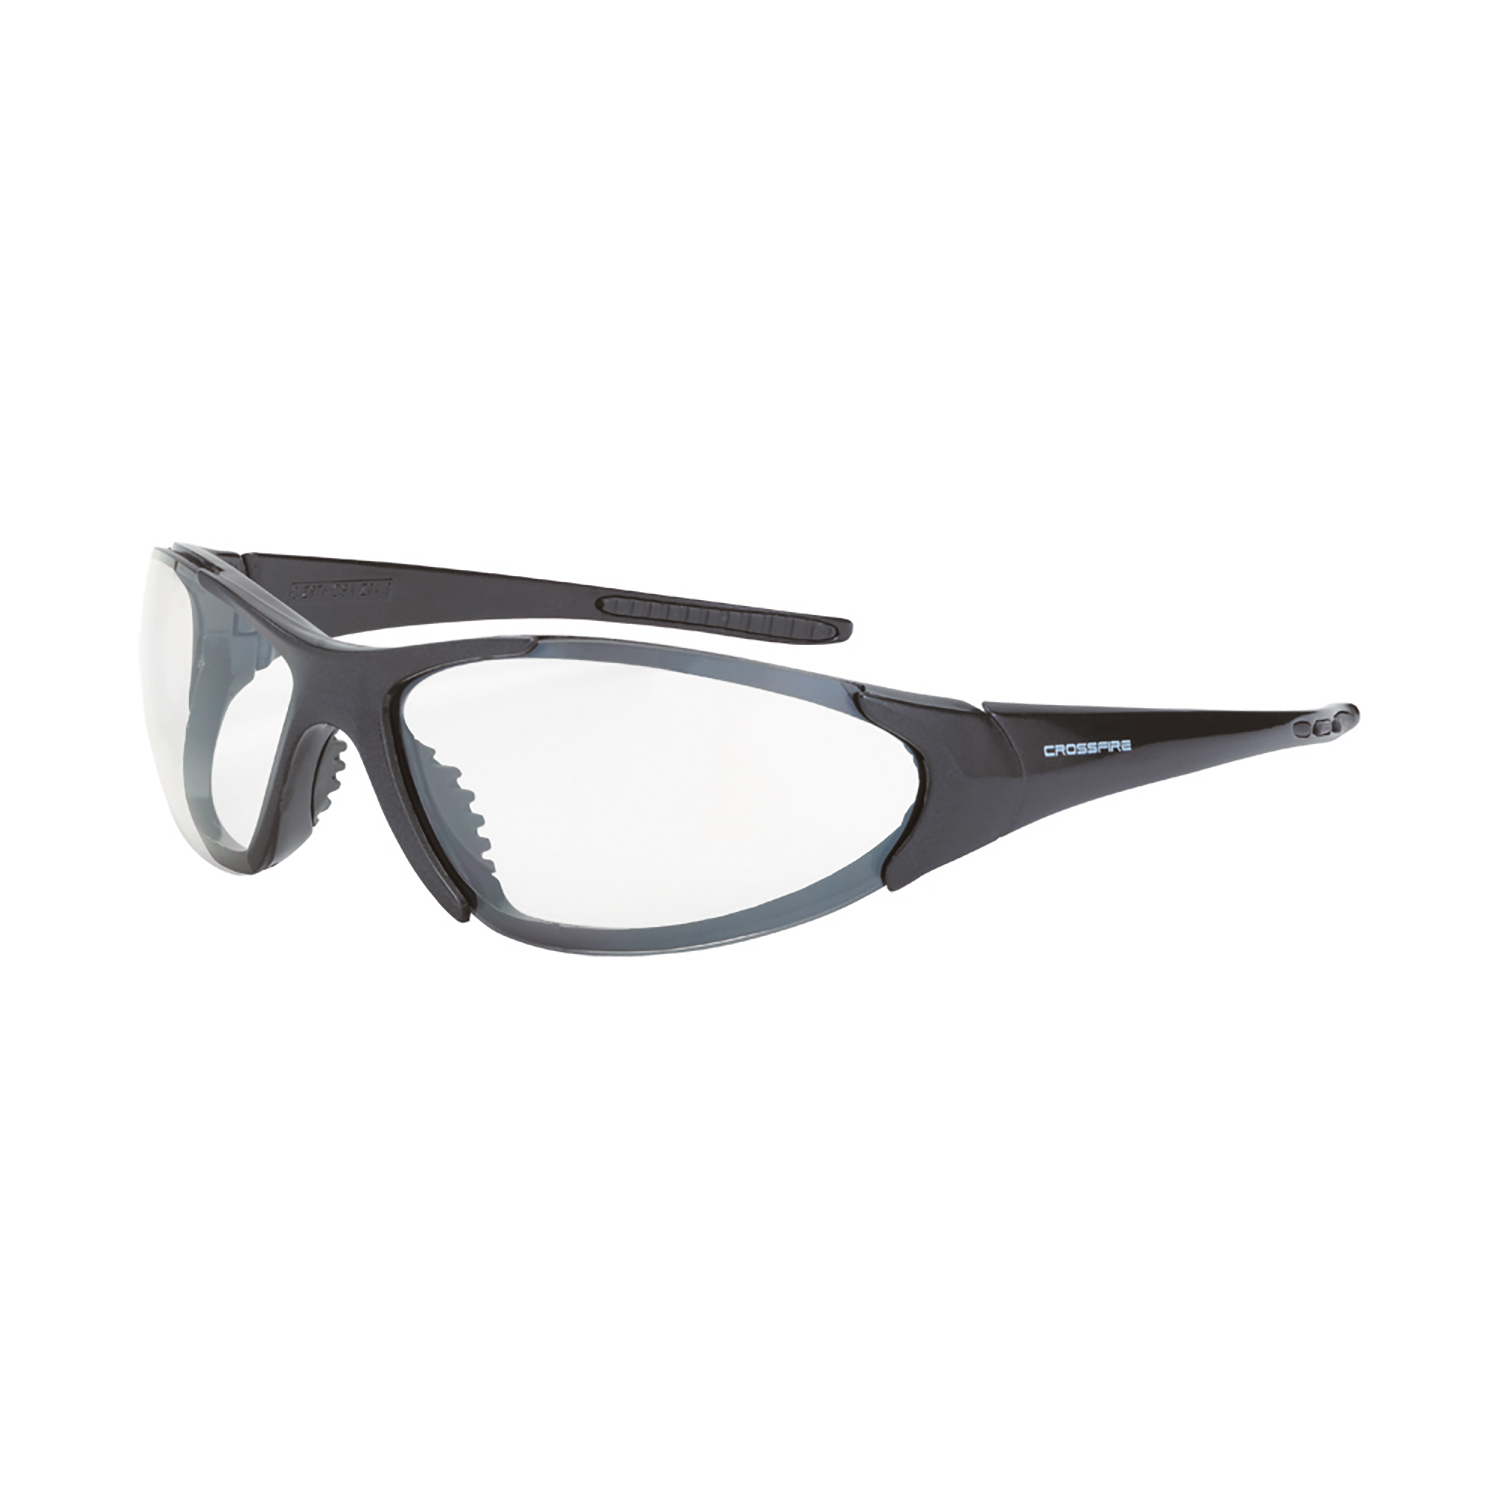 Core Premium Safety Eyewear - Shiny Pearl Gray Frame - Clear Anti-Fog Lens